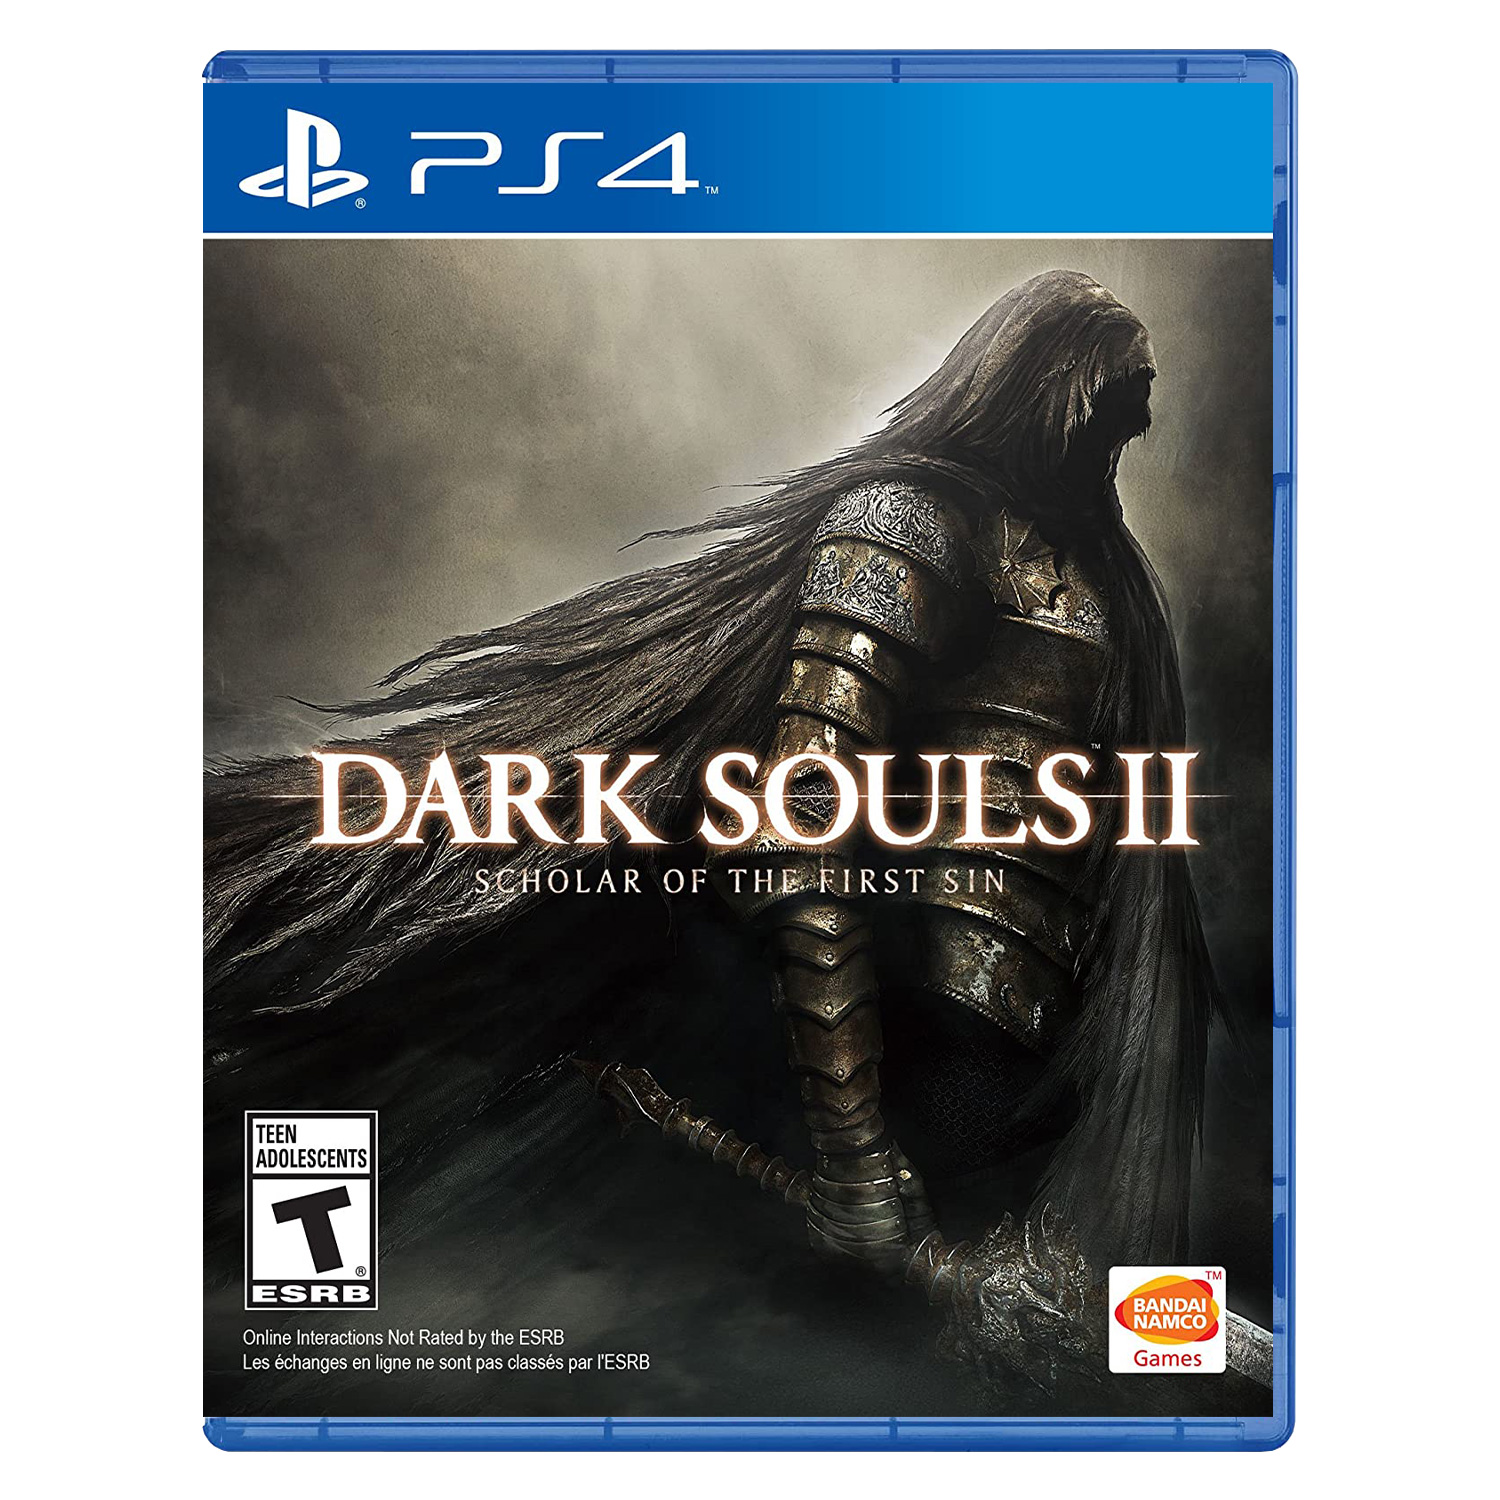 Jogo Dark Souls II: Scholar Of The First Sin para PS4